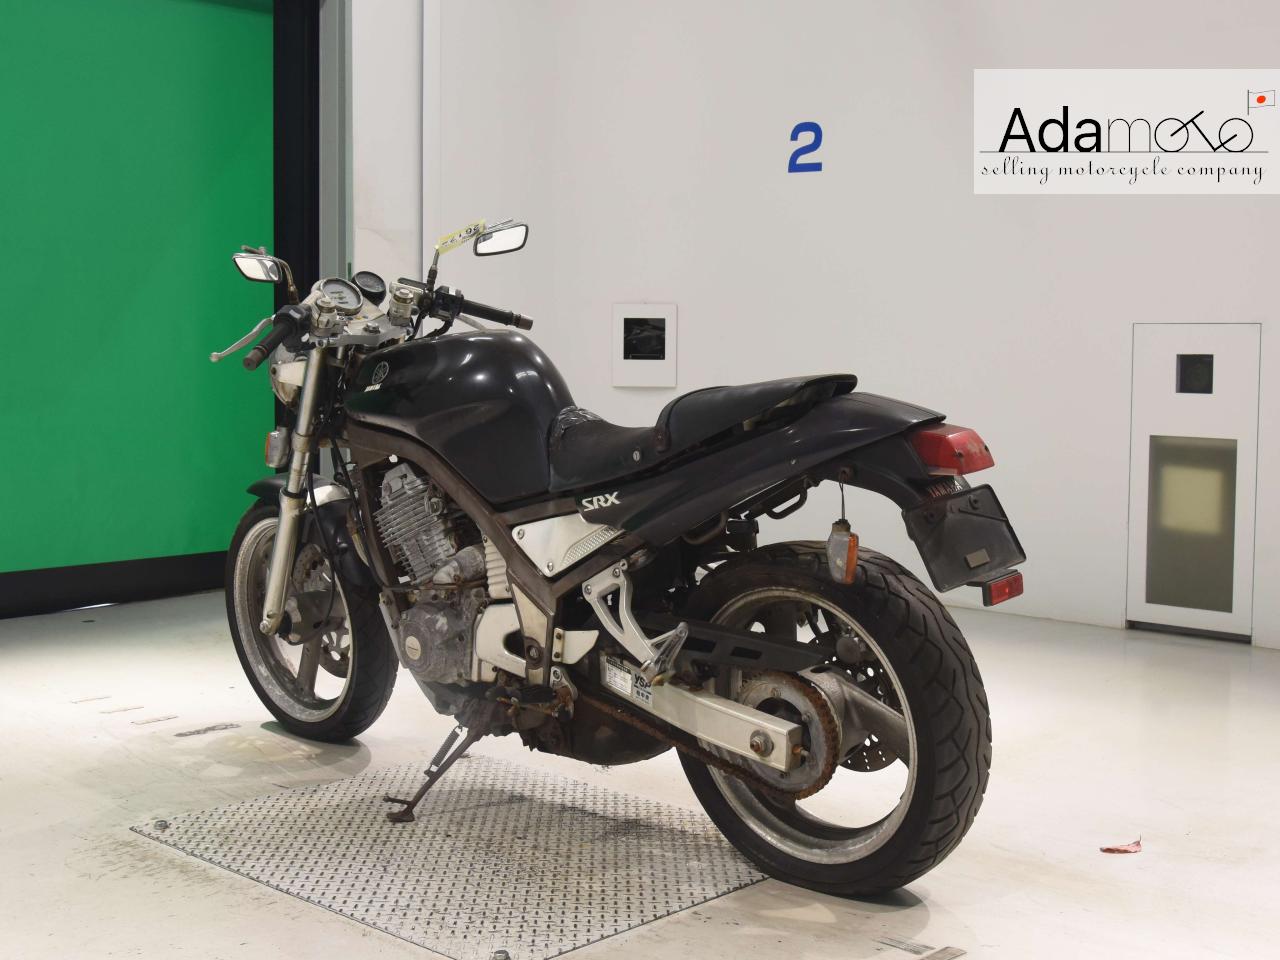 Yamaha SRX400 4 - Adamoto - Motorcycles from Japan